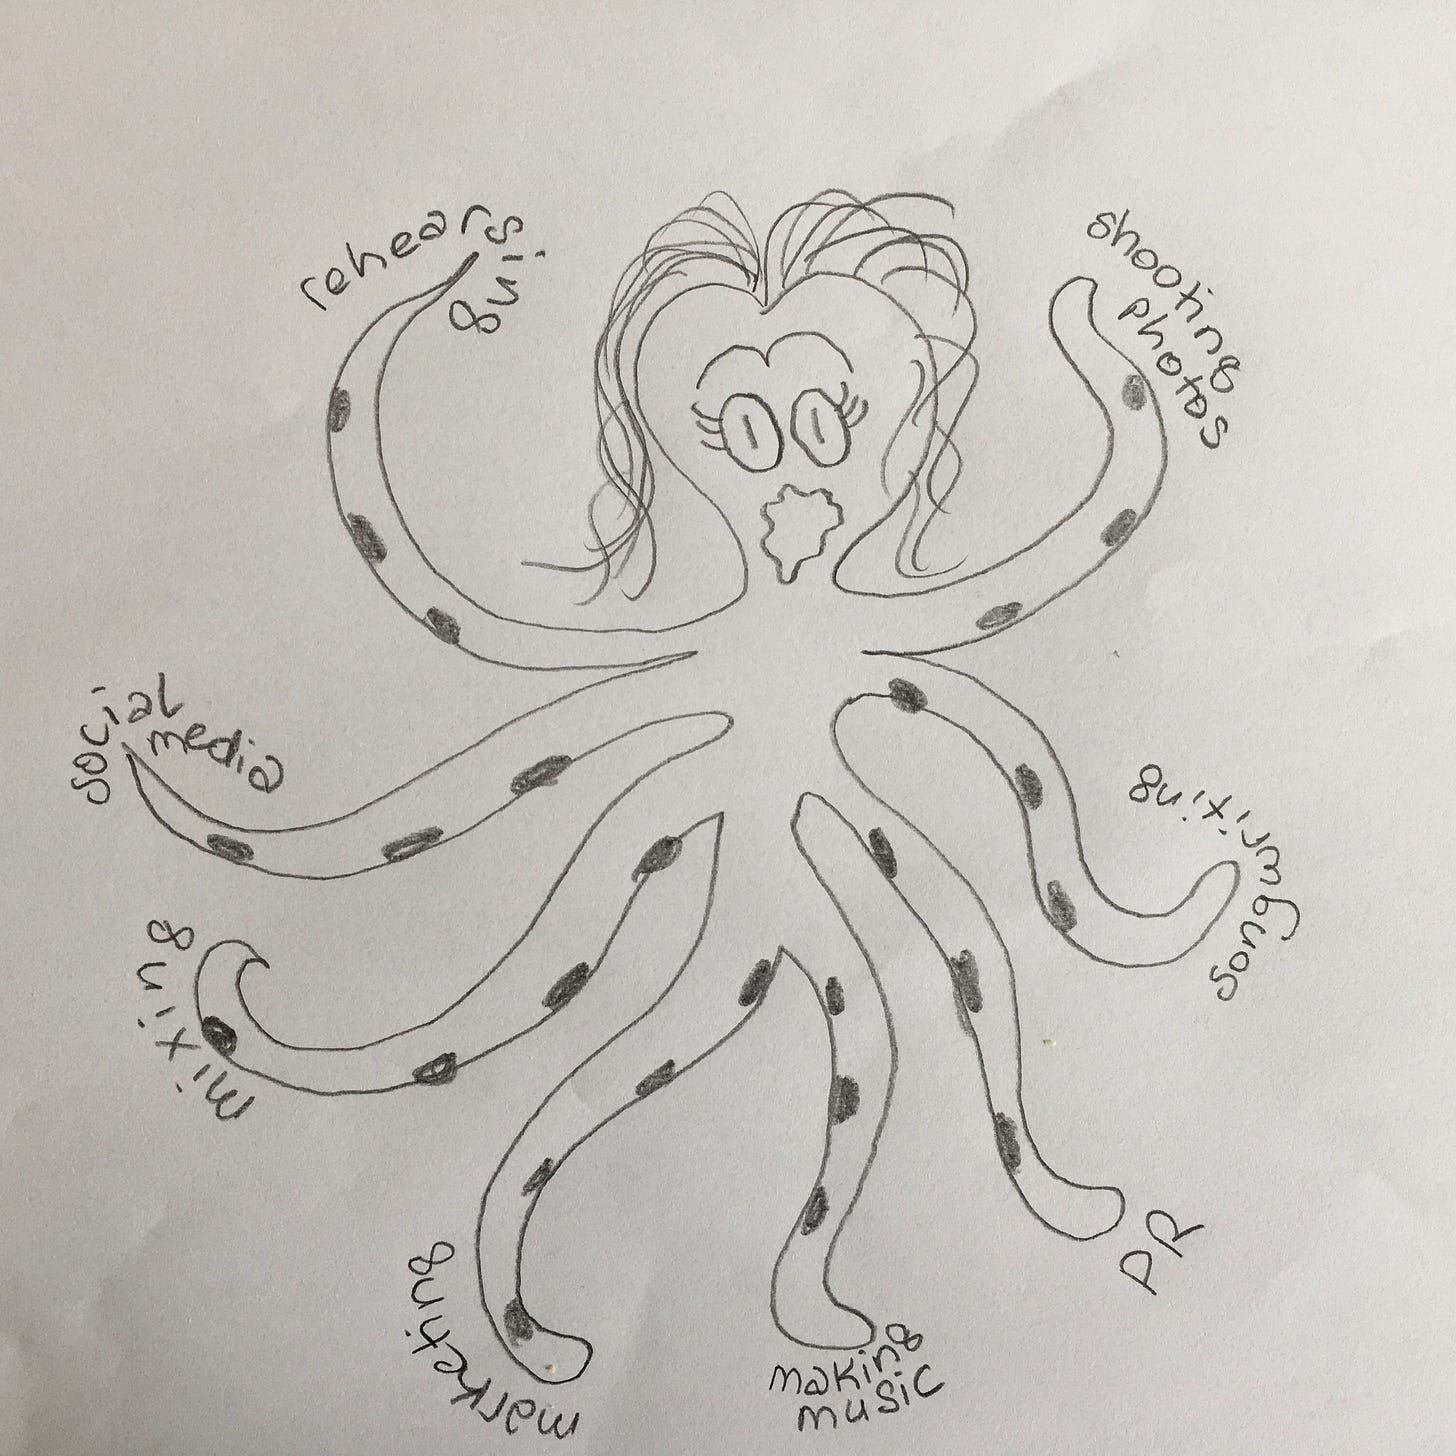 illustration white octopus tentacles rehearsing social media mixing marketing making music PR songwriting photos octopus shock